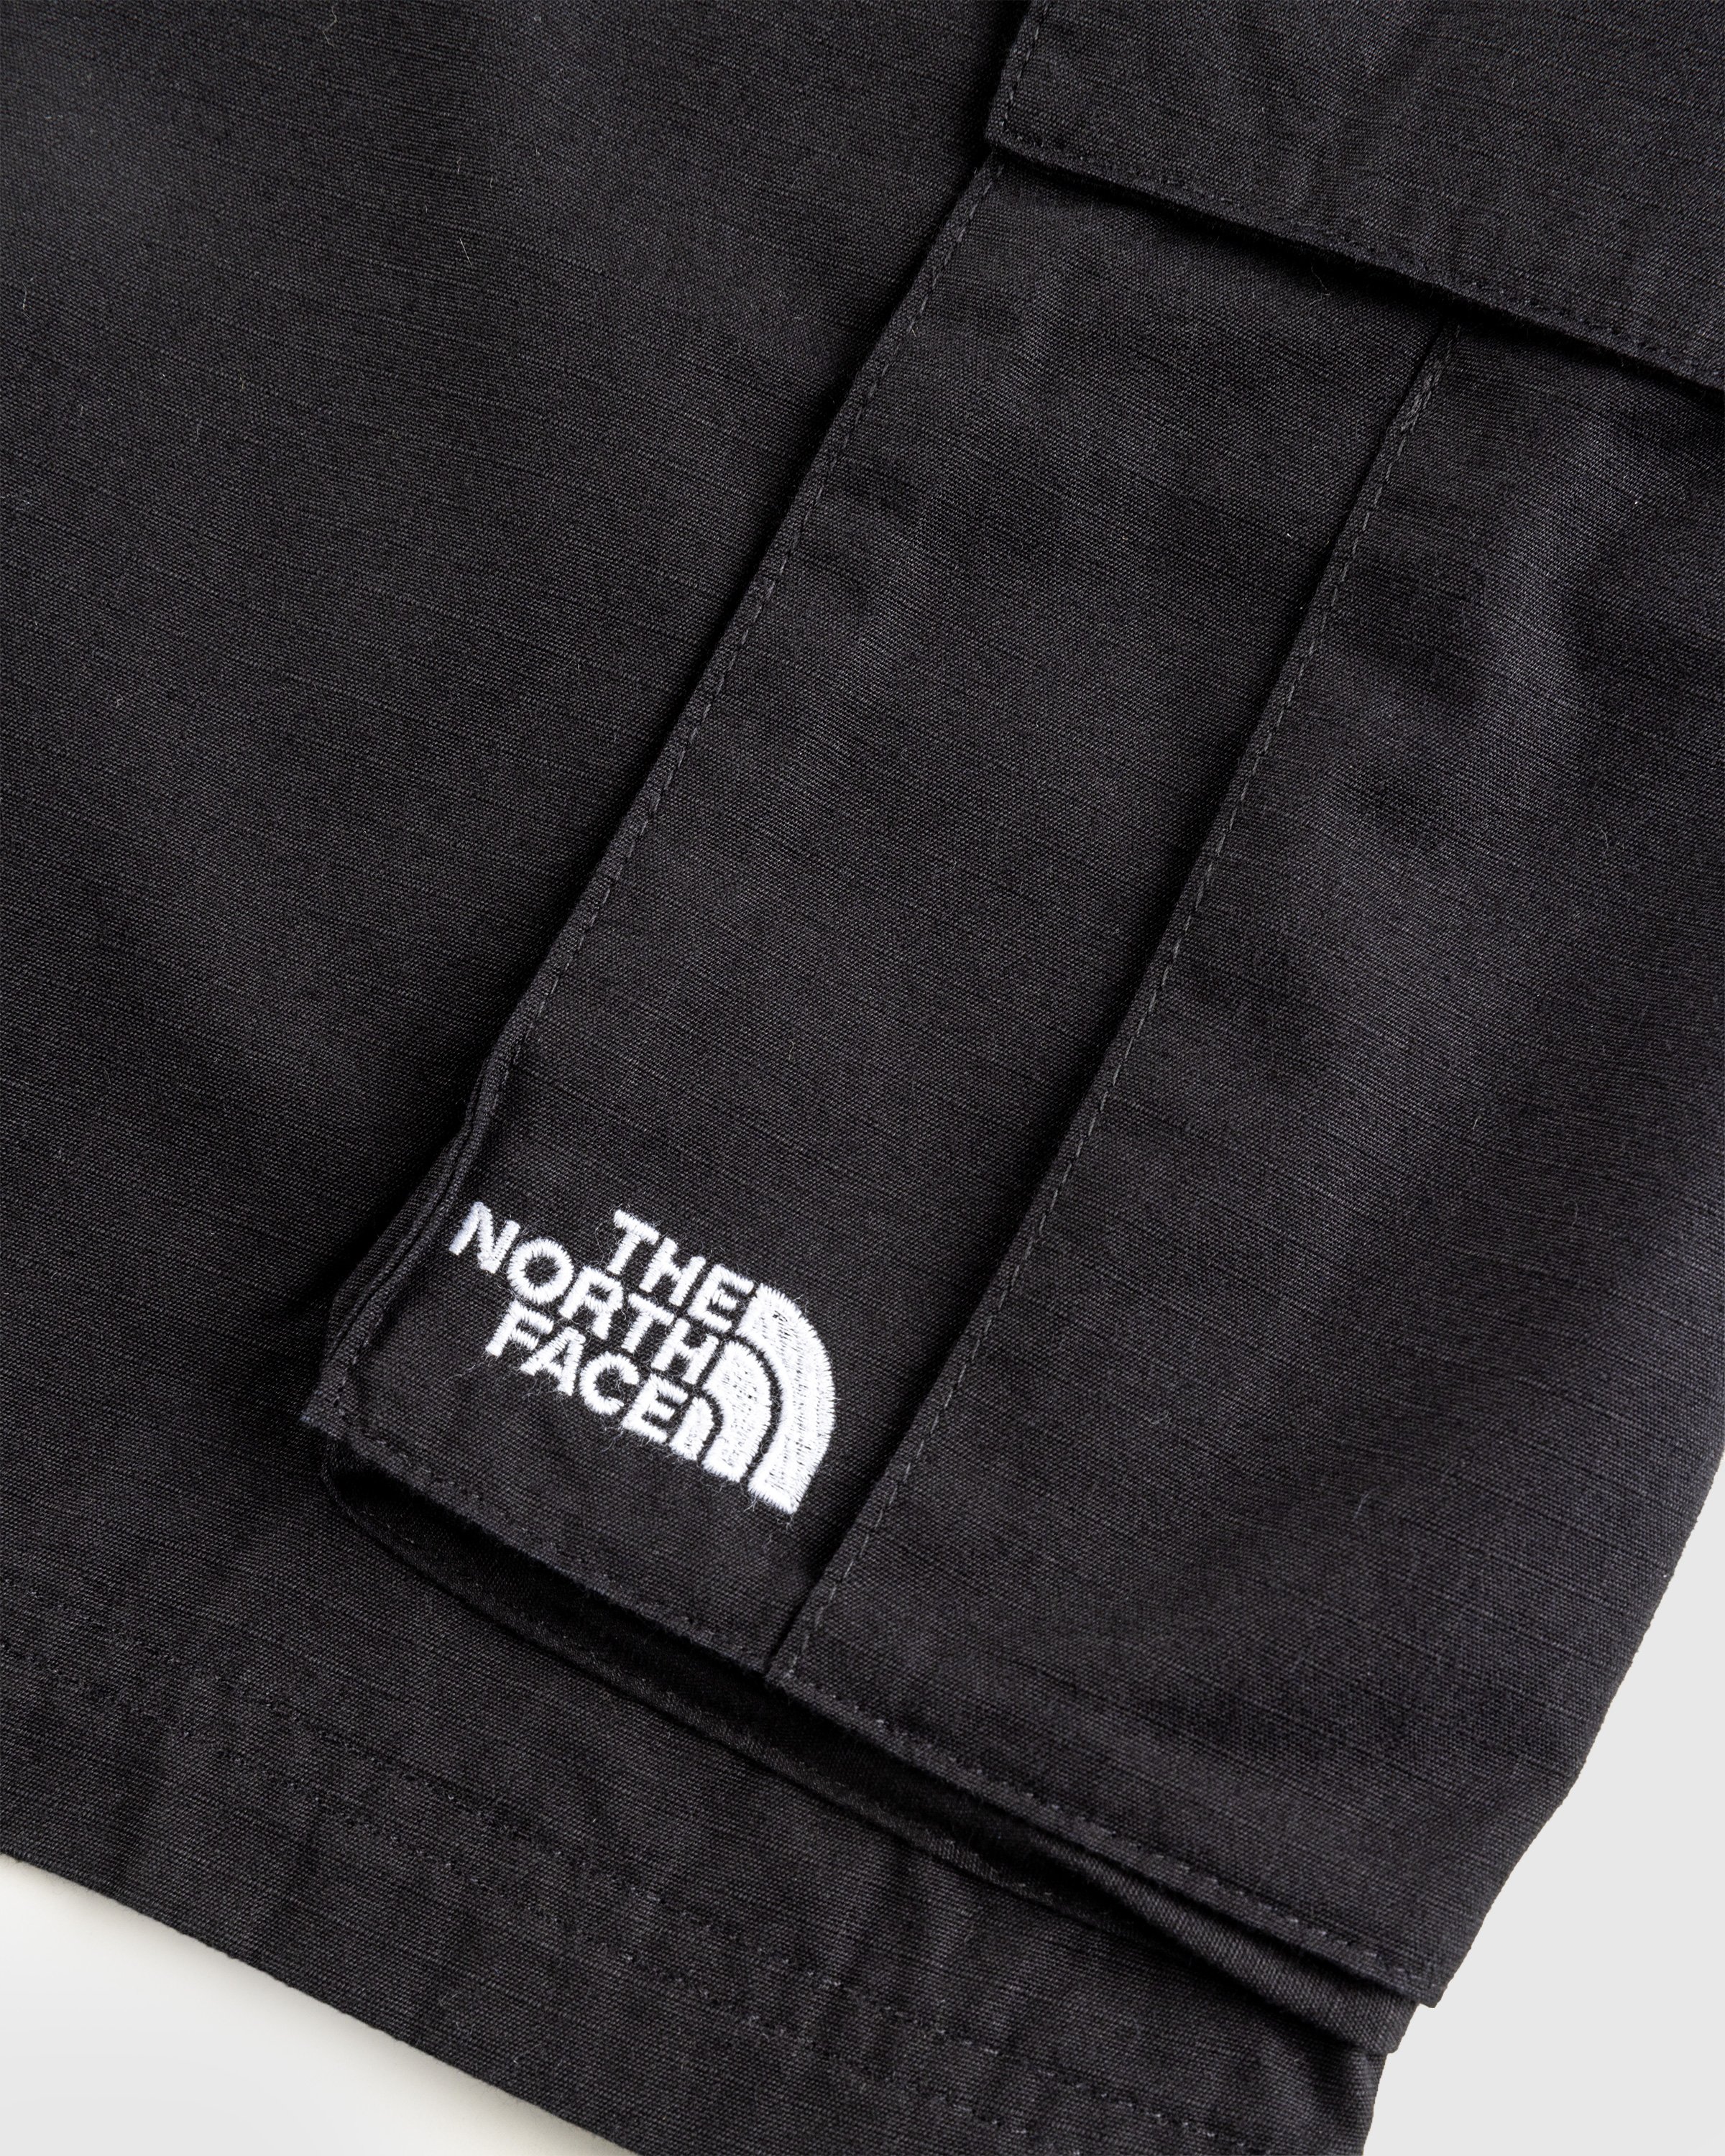 The North Face - M ANTICLINE CARGO SHORT - EU TNF BLACK - Clothing - Black - Image 6